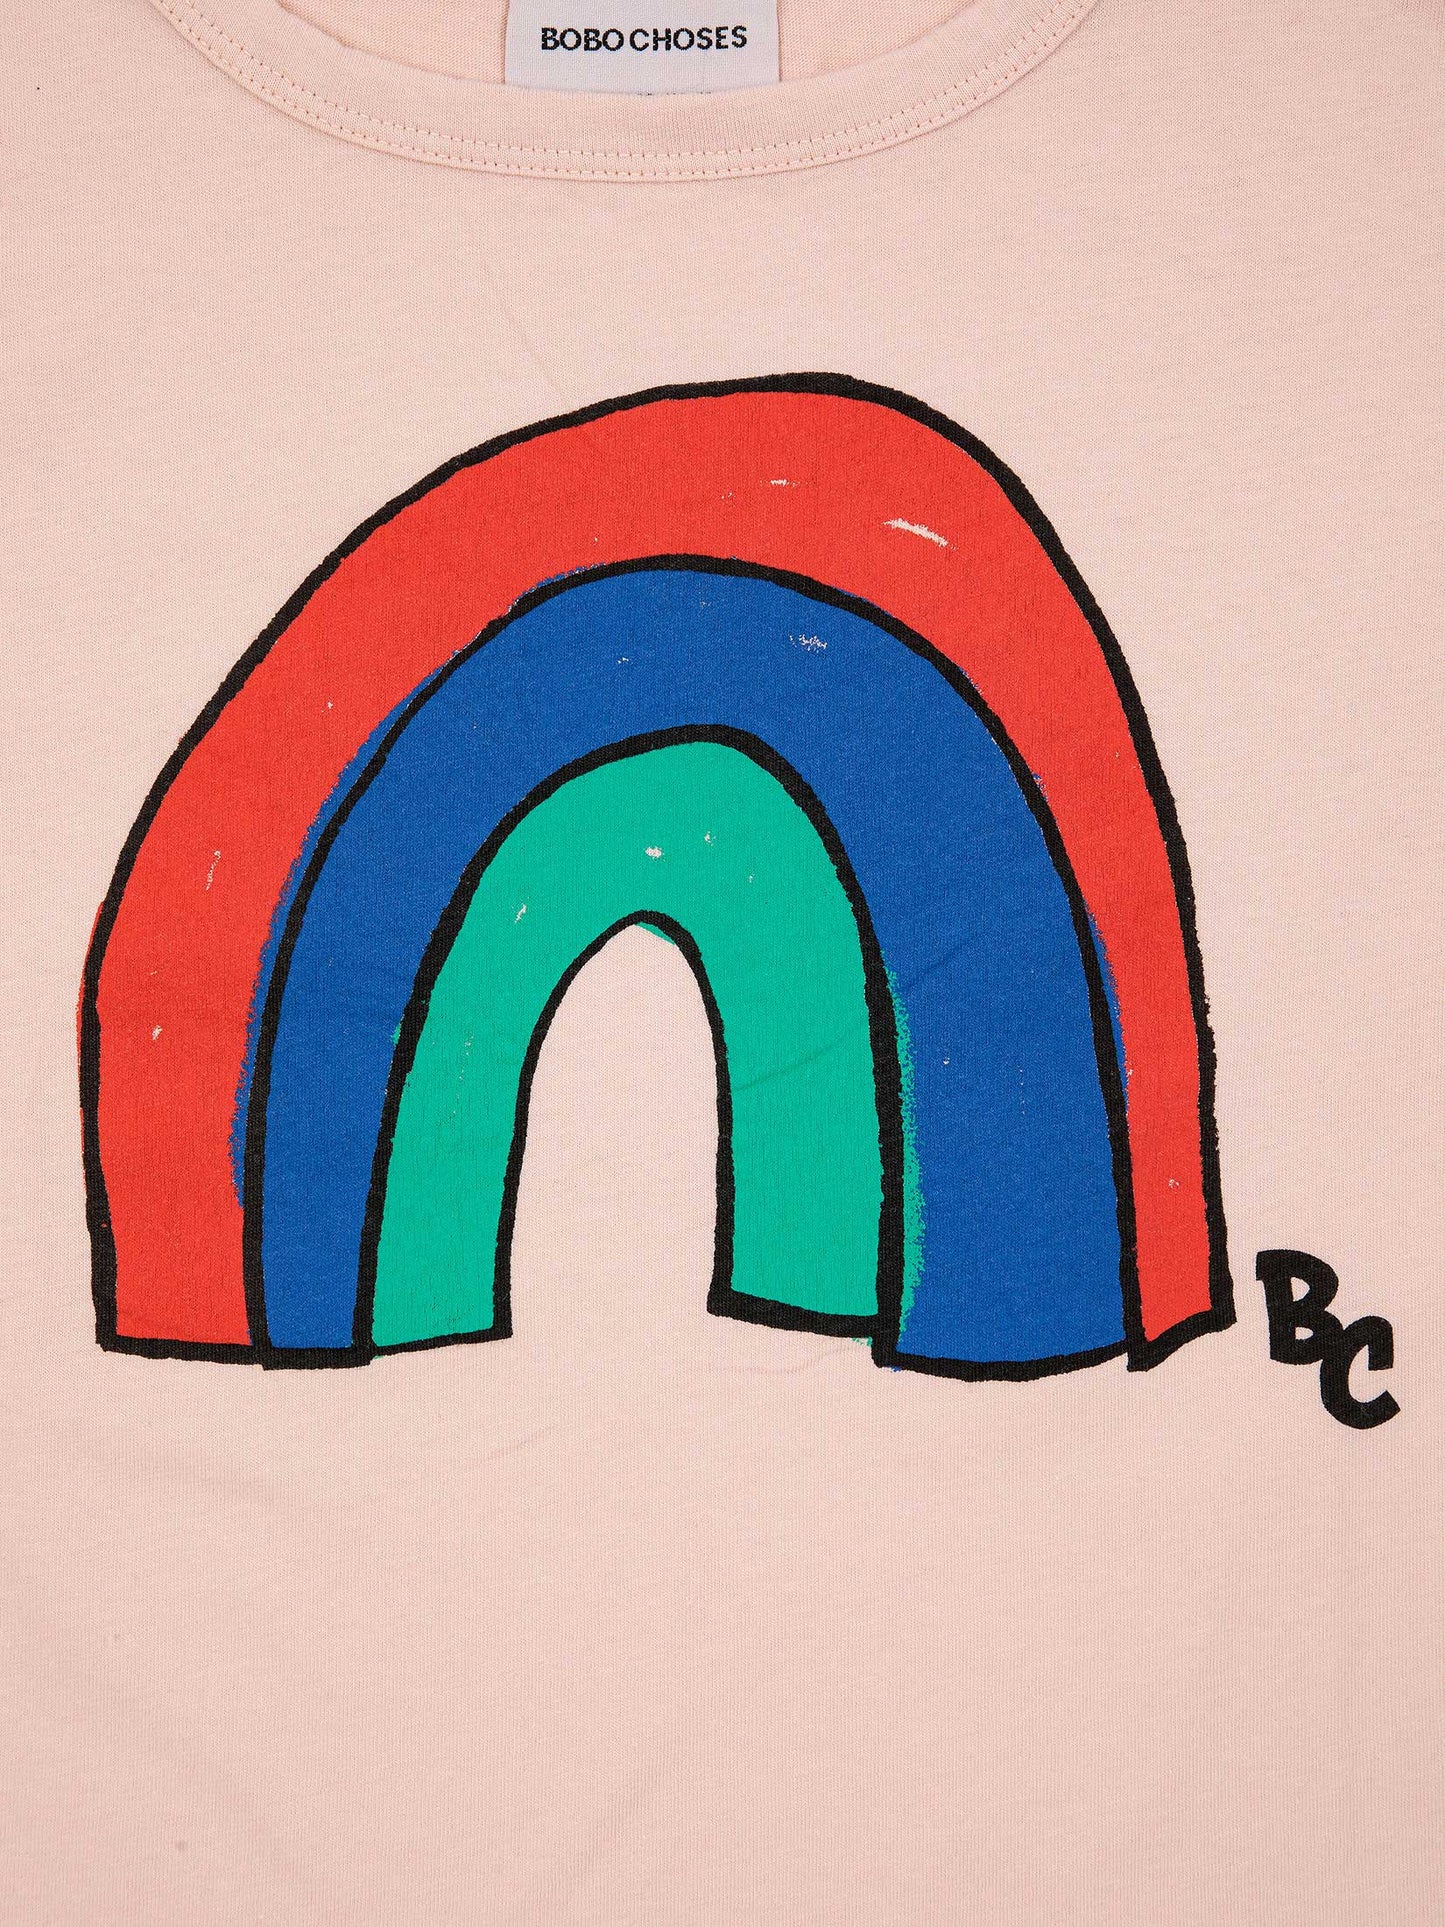 Rainbow T-Shirts